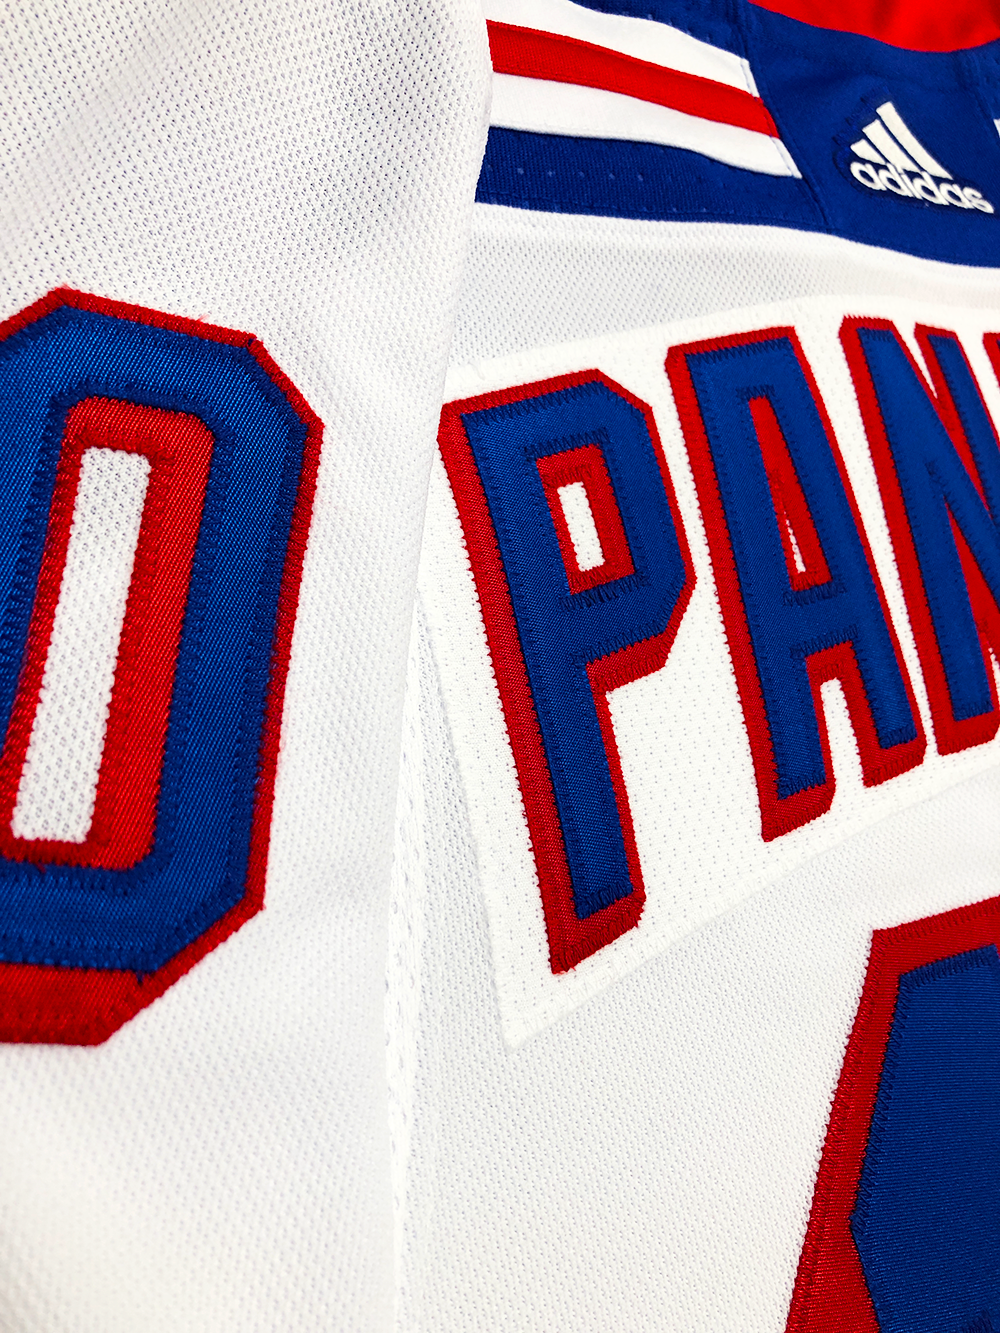 Artemi Panarin New York Rangers Authentic Pro Adidas Nhl Jersey Hockey Authentic